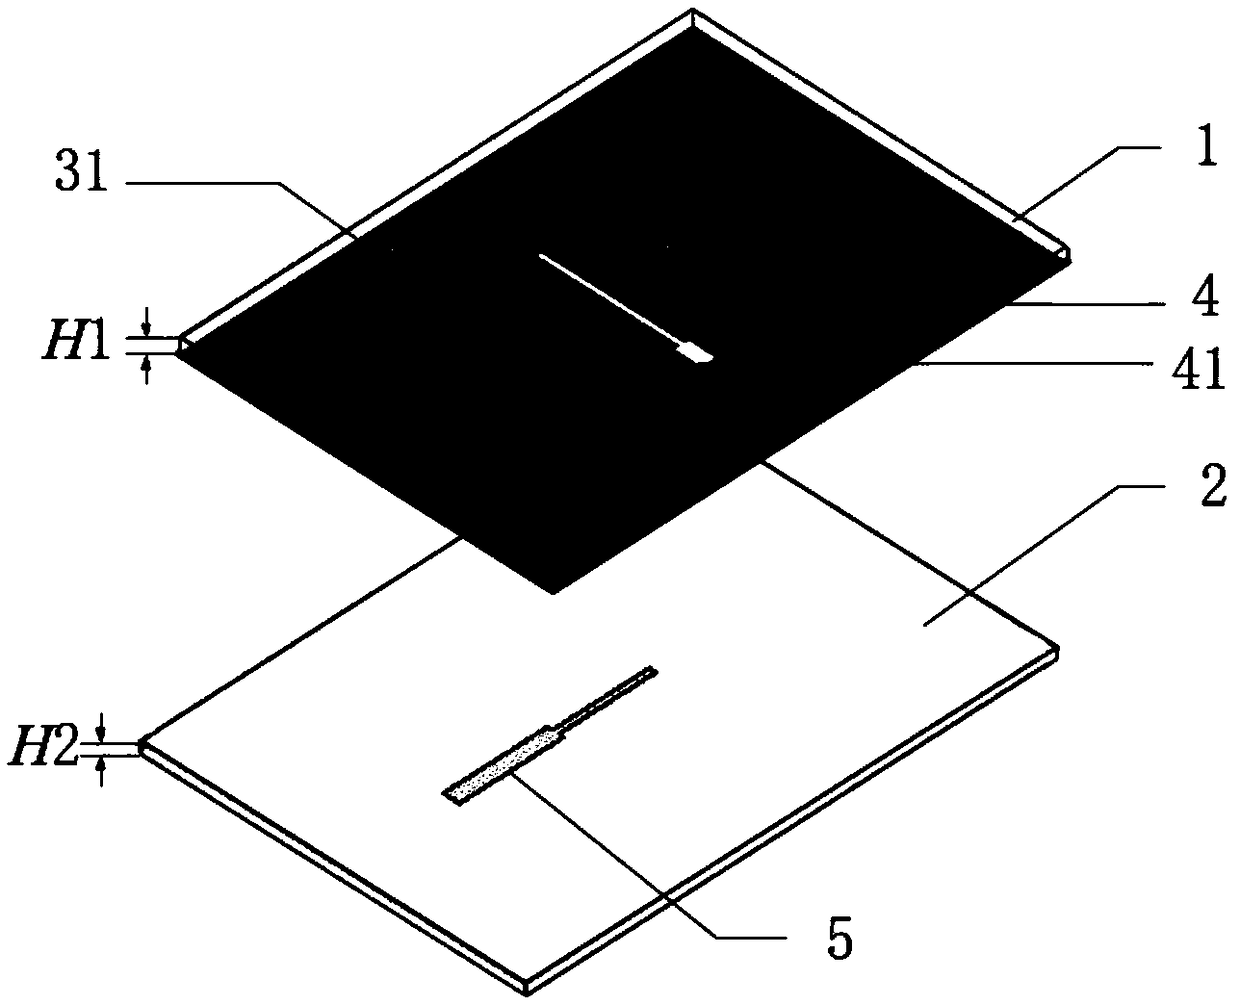 A wideband low profile microstrip antenna